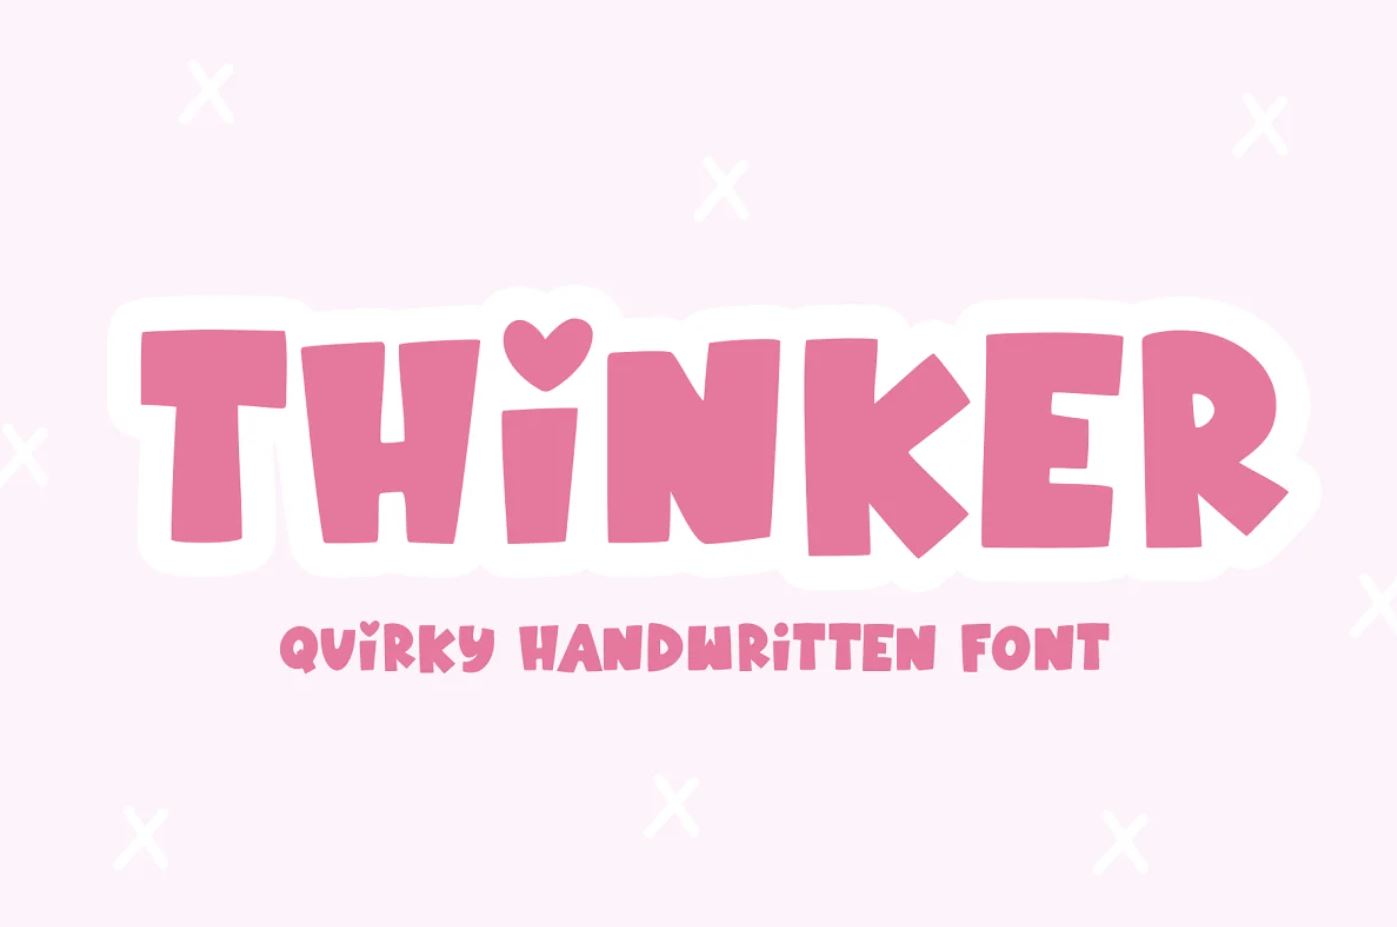 Quirky Handwritten Display Font